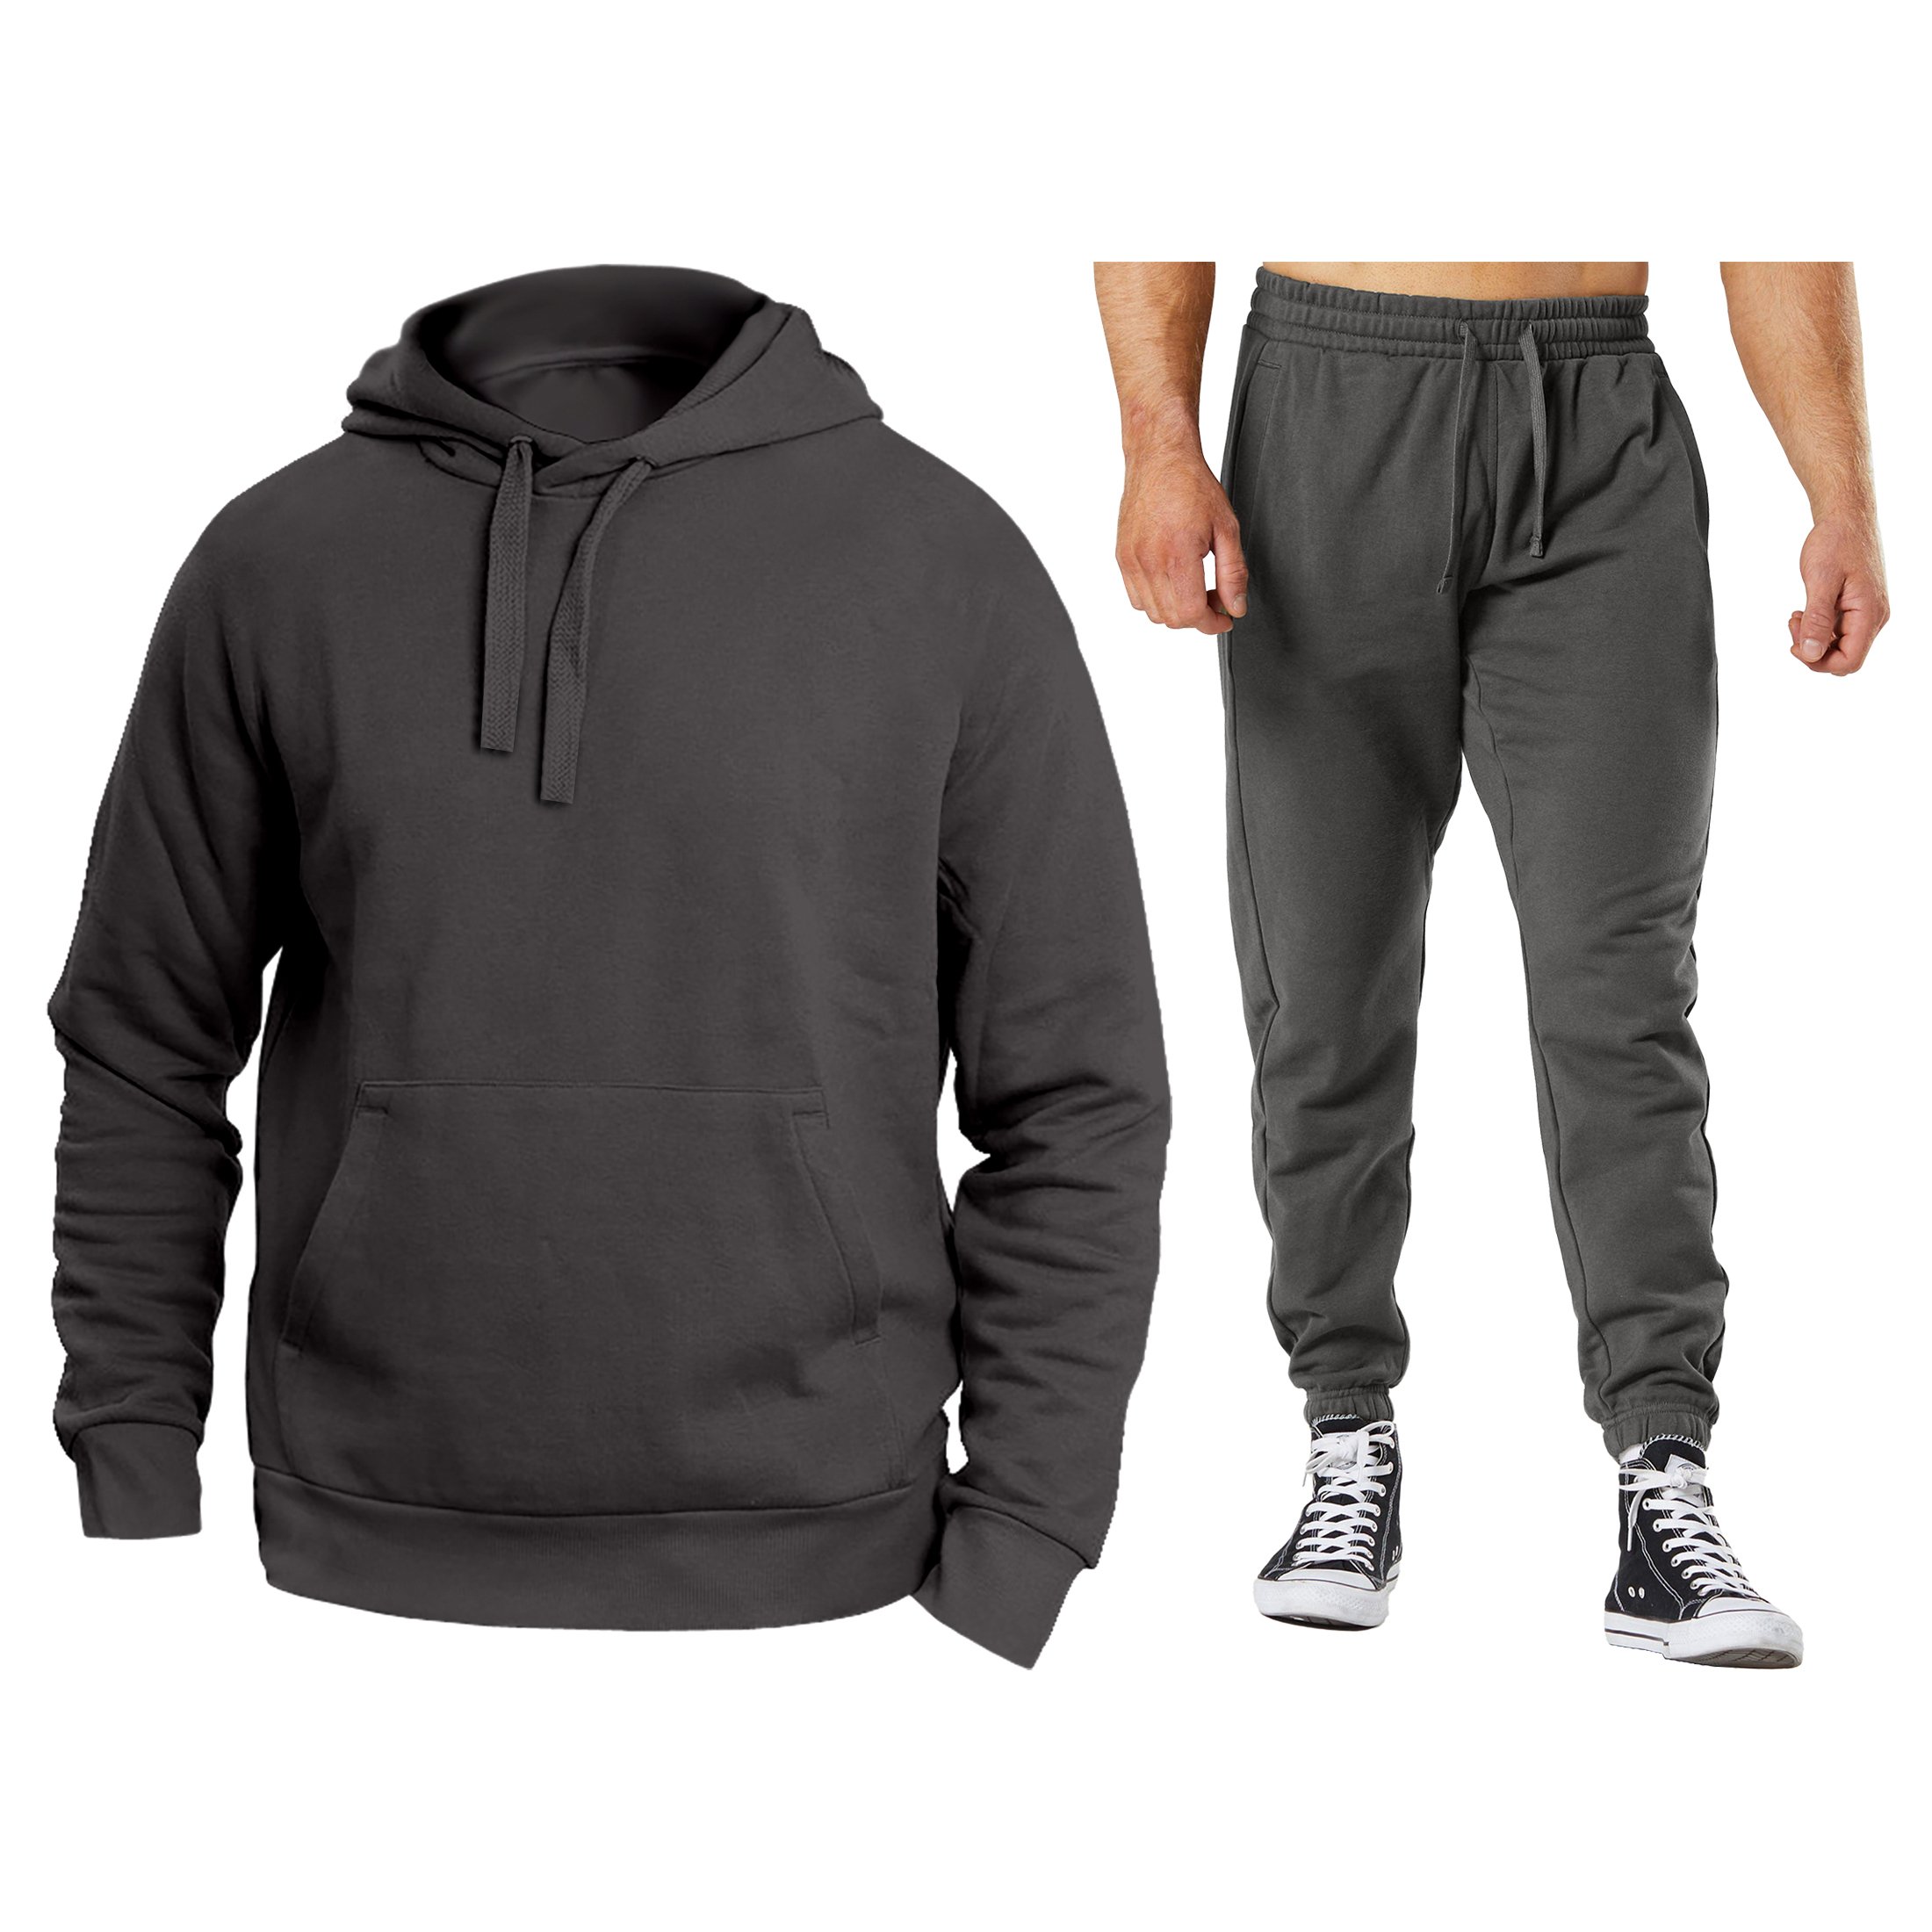 Men's Athletic Warm Jogging Pullover Active Sweatsuit - Charcoal, X-Large